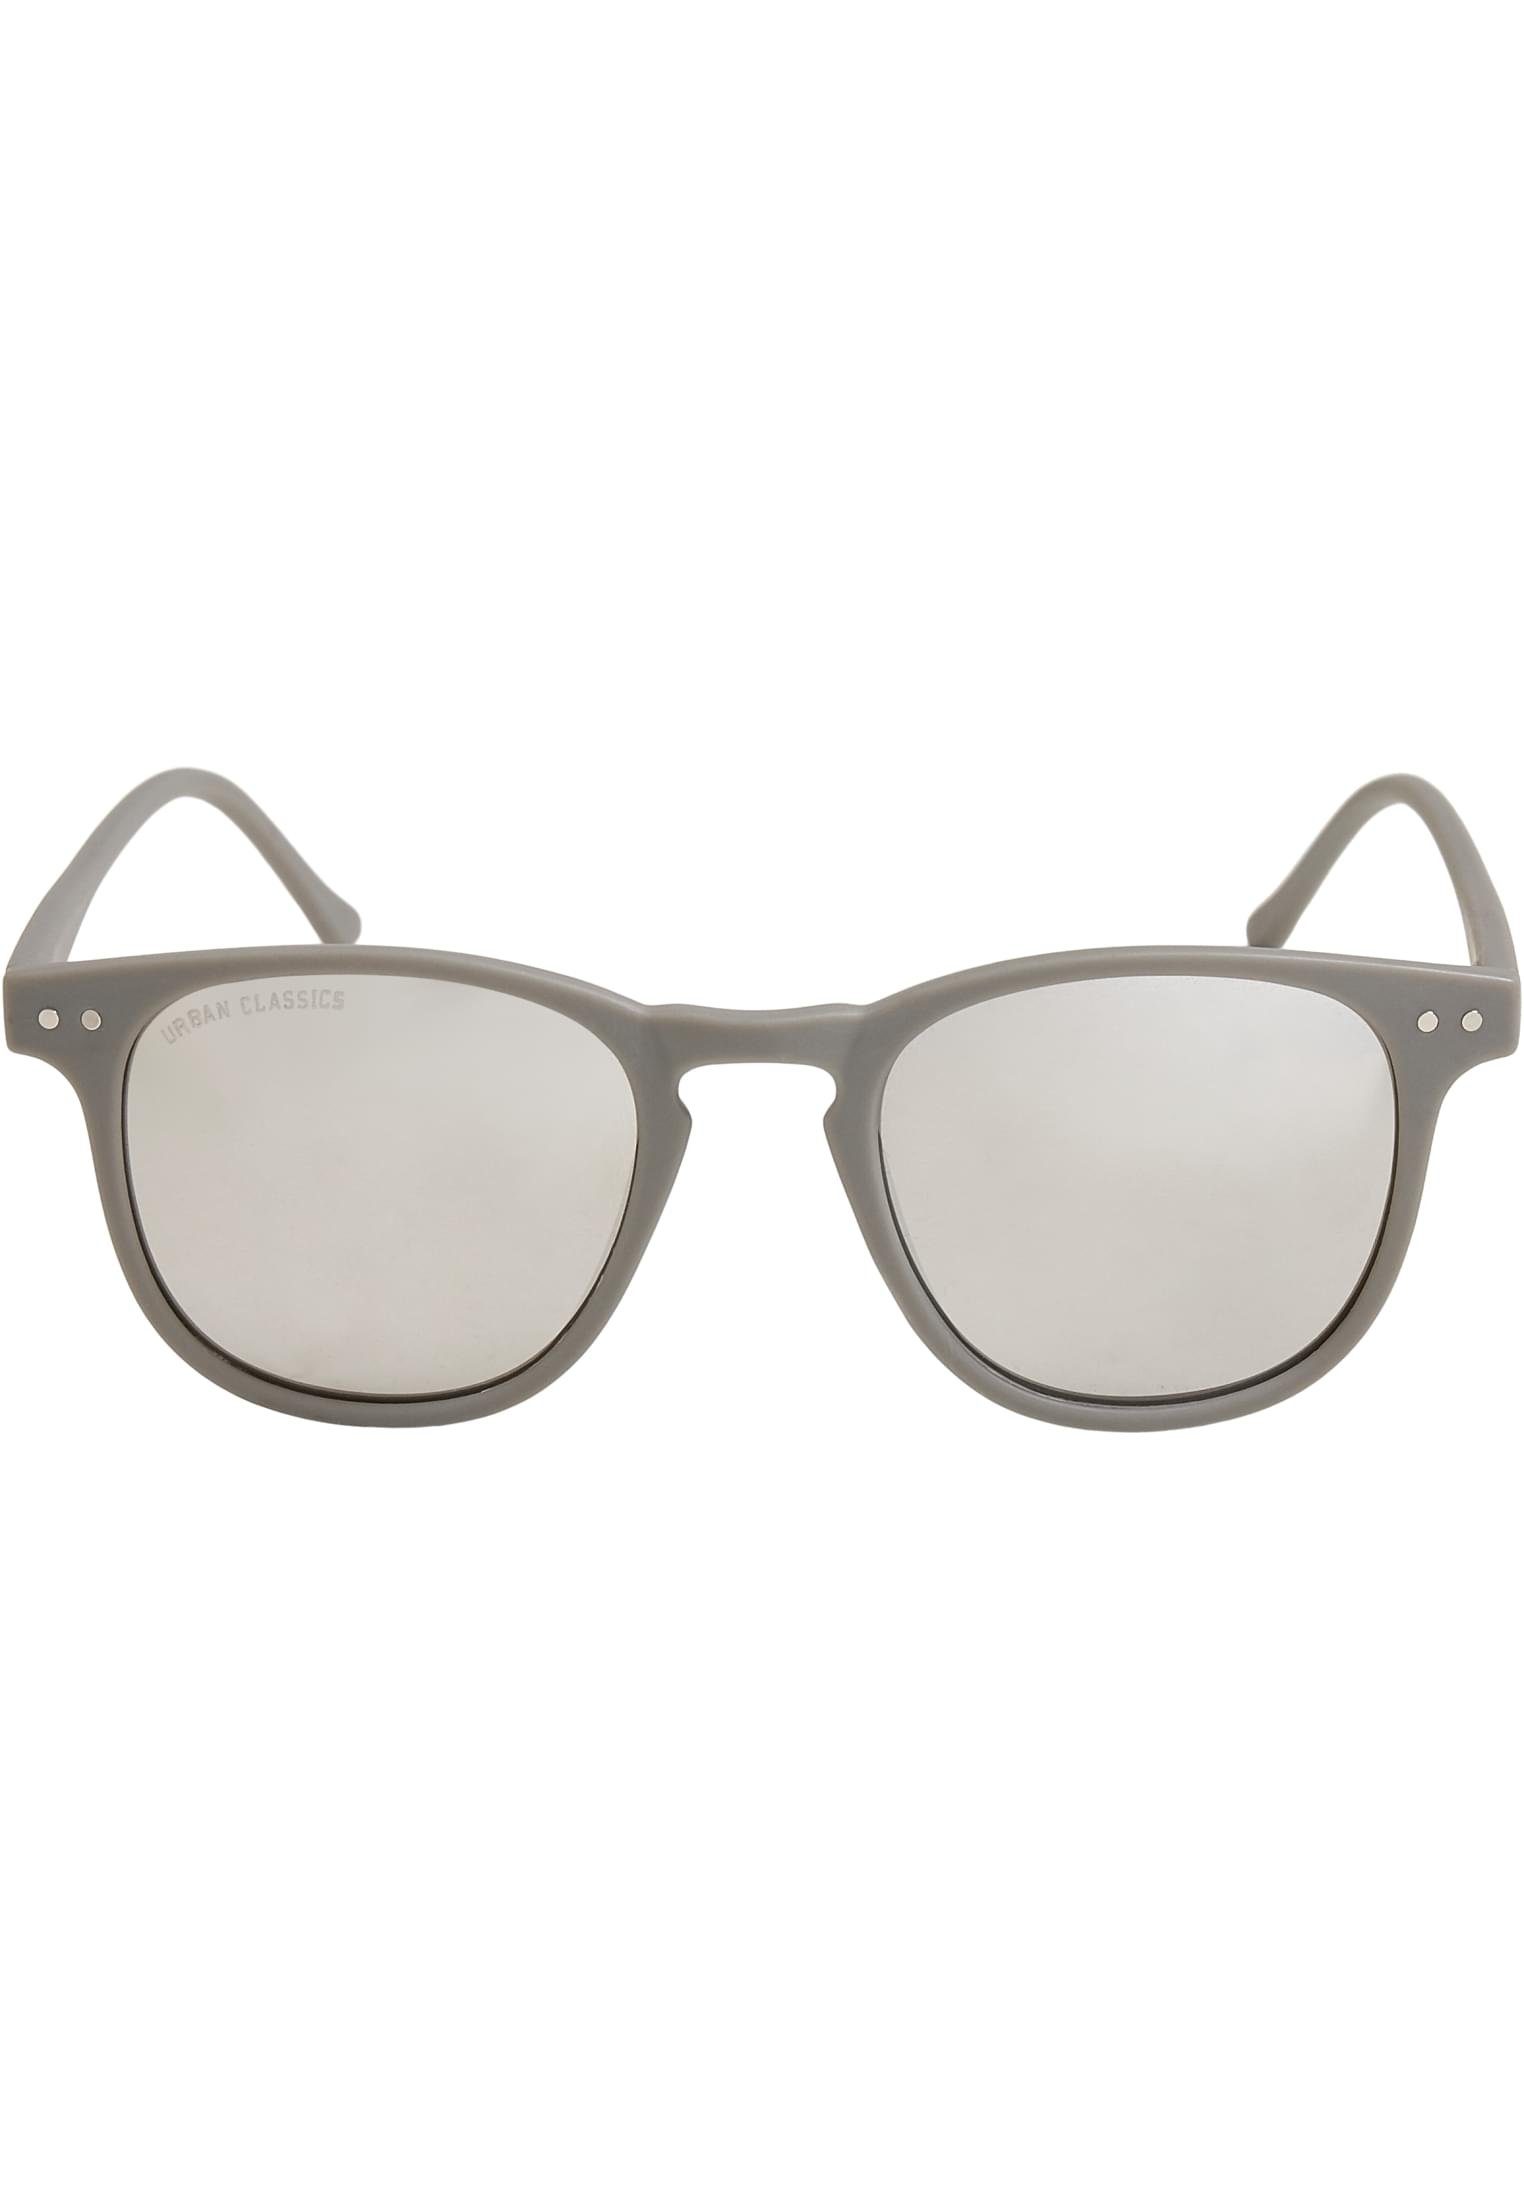 URBAN CLASSICS Sonnenbrille Unisex Sunglasses Arthur grey/silver with Chain